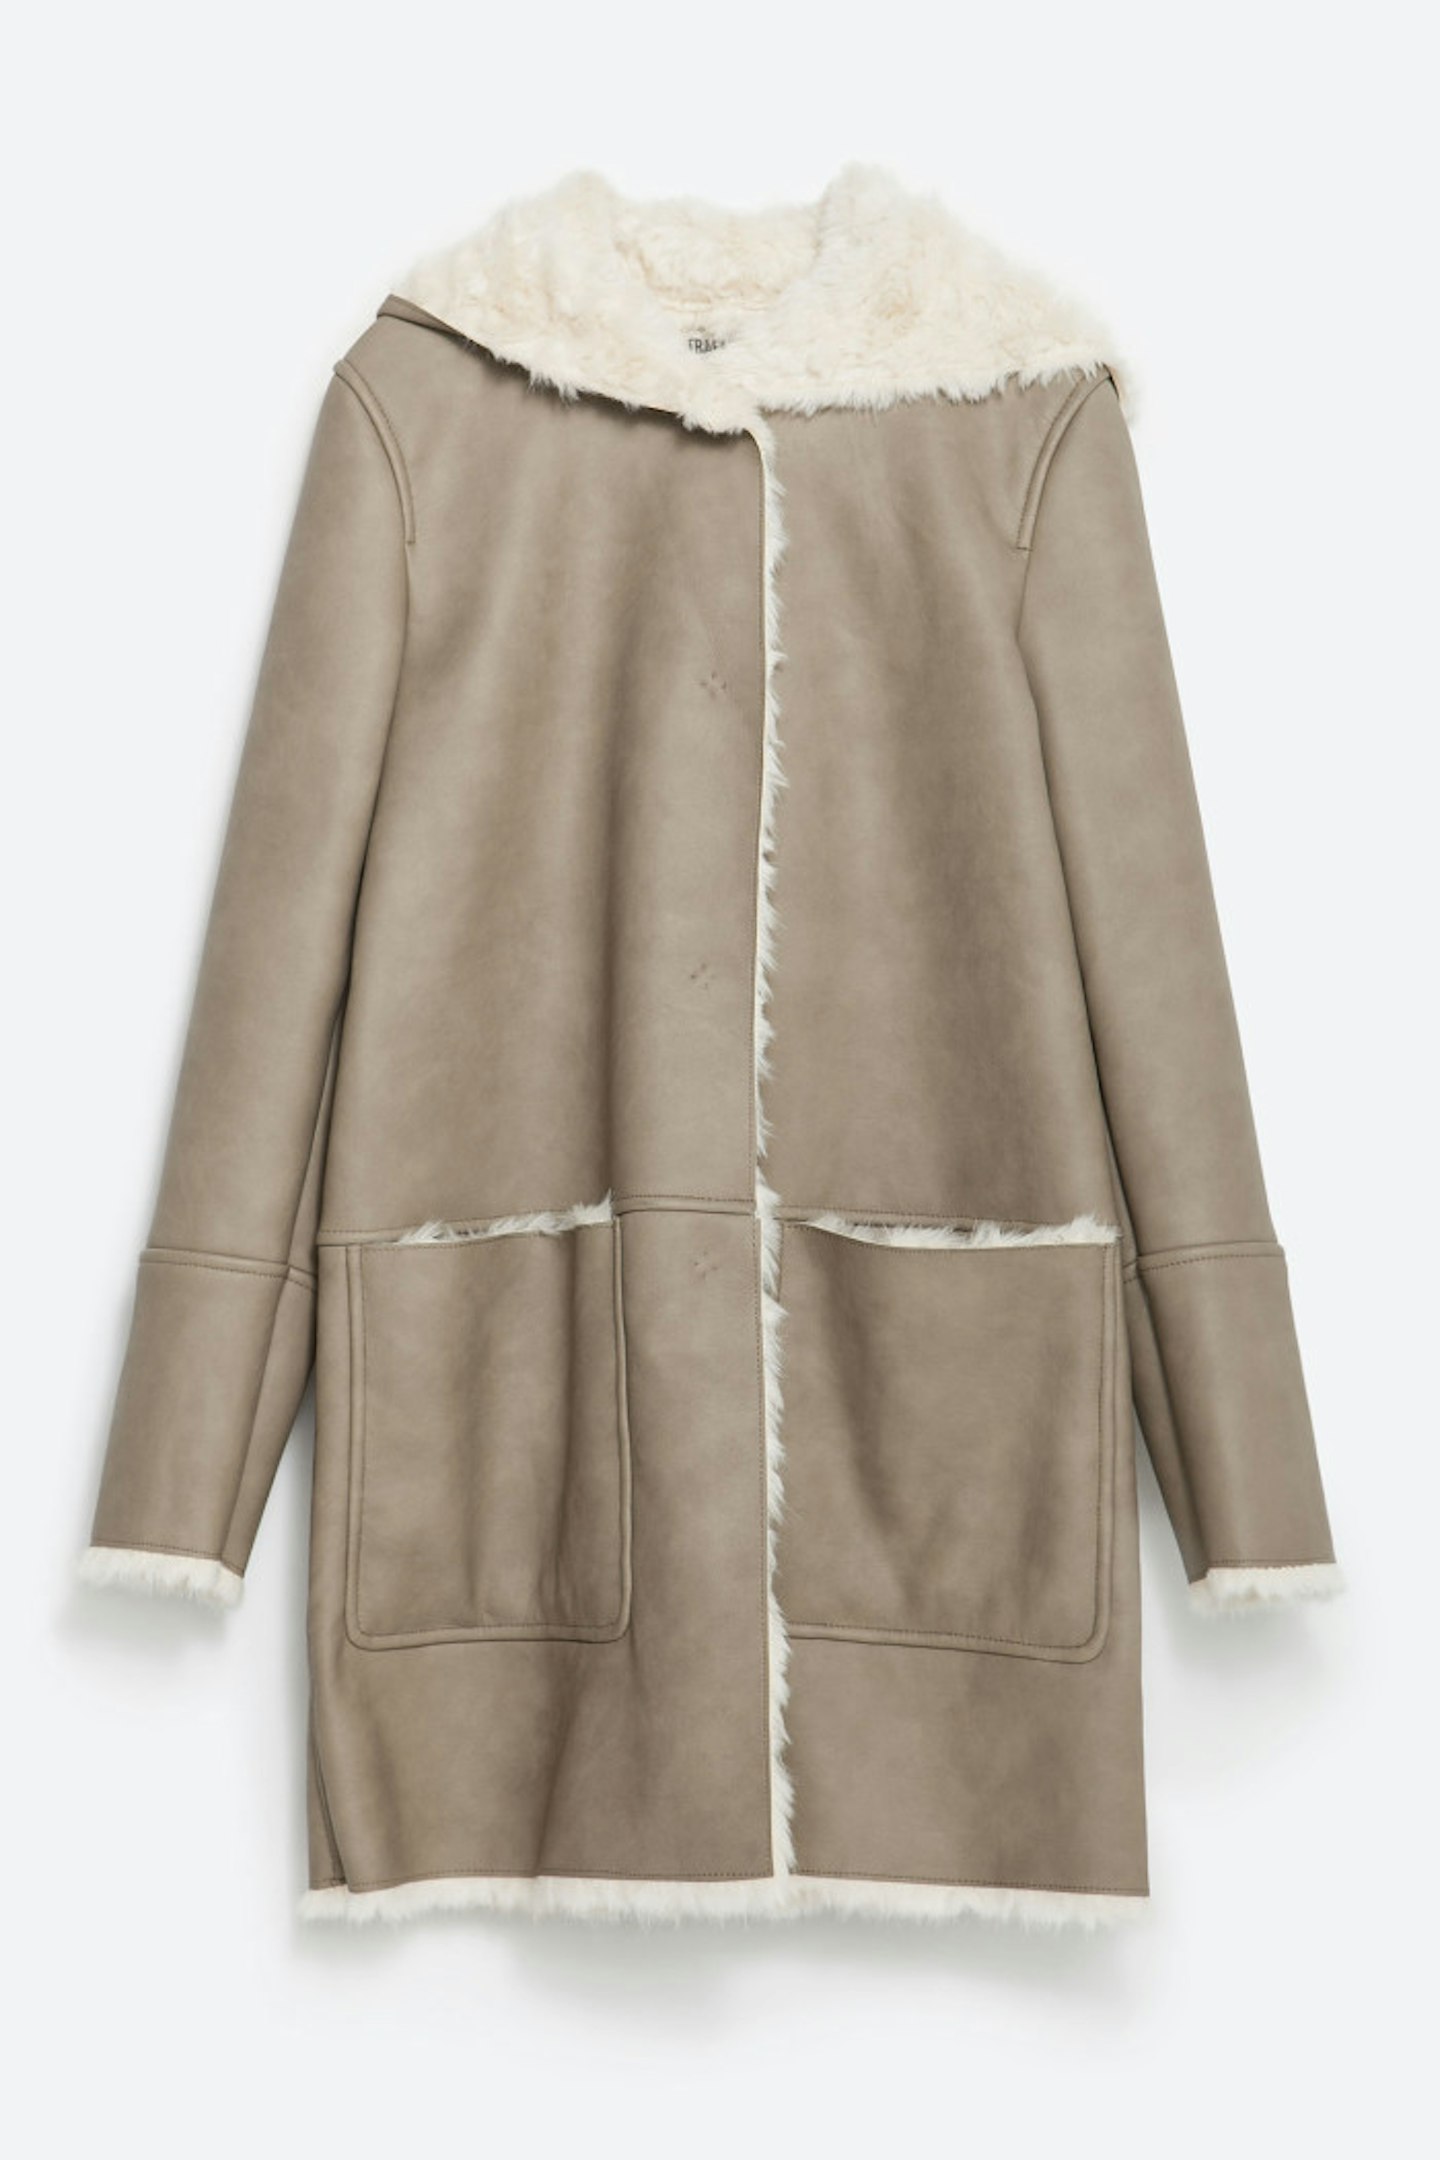 Zara coat with faux fur interior in stone